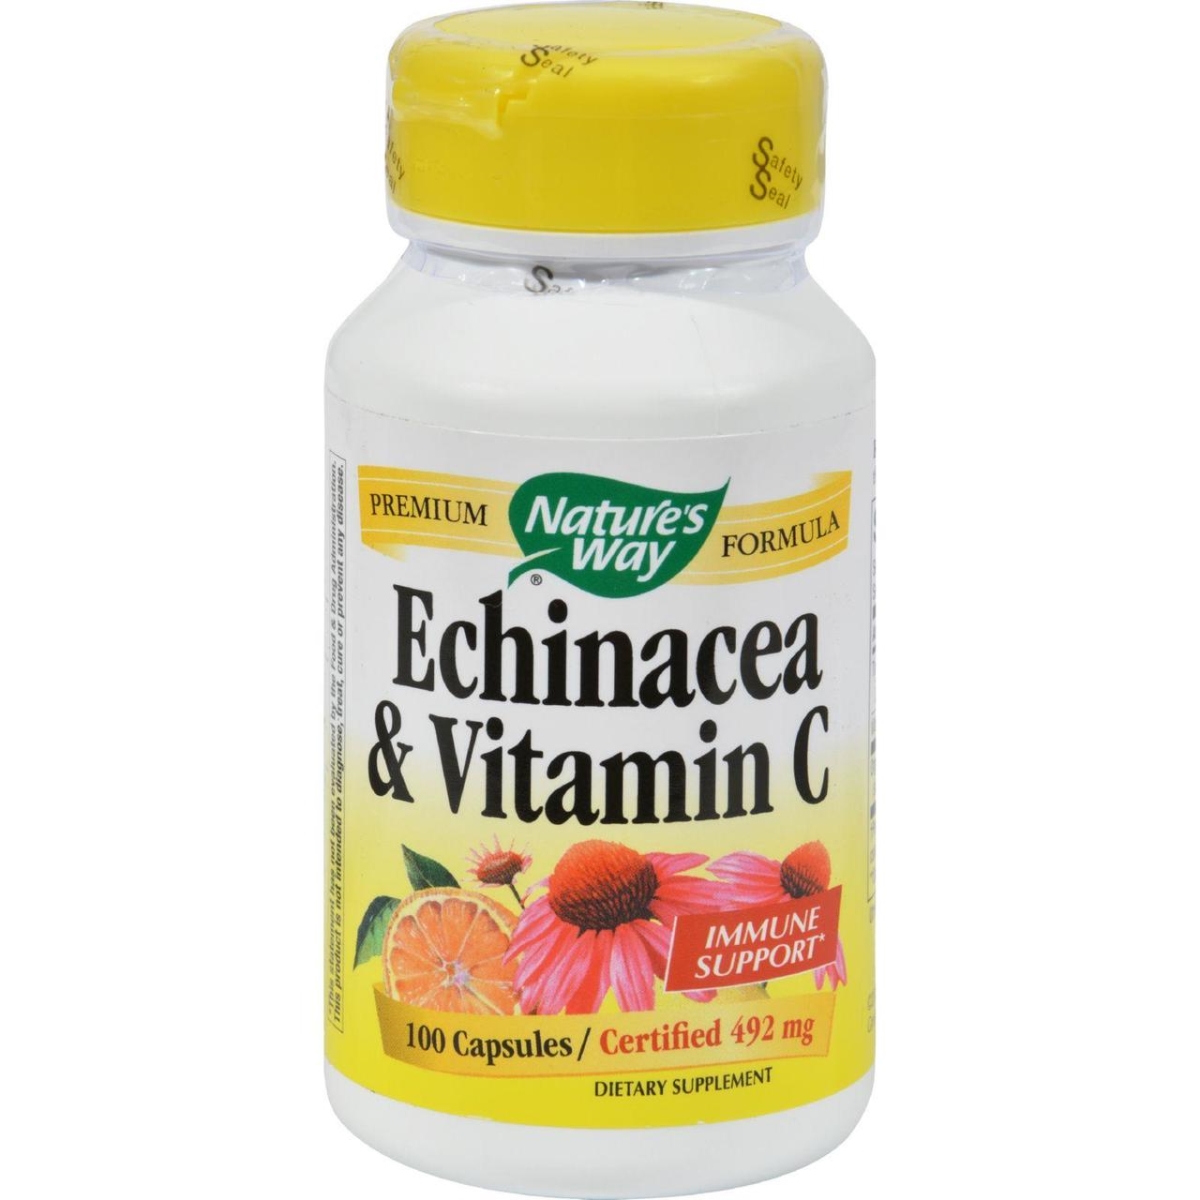 Hg0298208 492 Mg Echinacea & Vitamin C, 100 Capsules